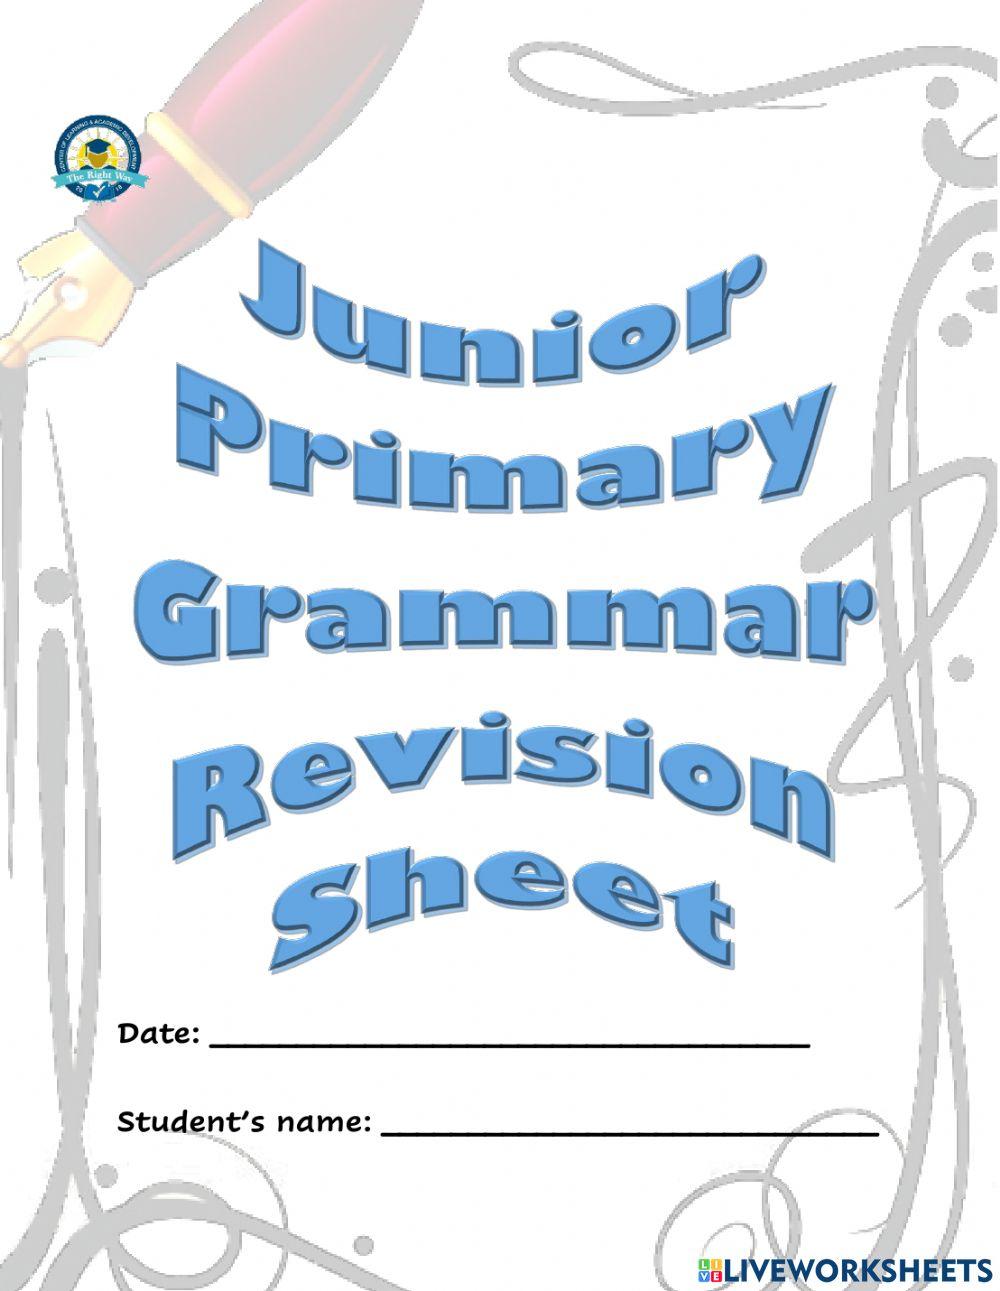 Grammar Week 3 Revision Sheet